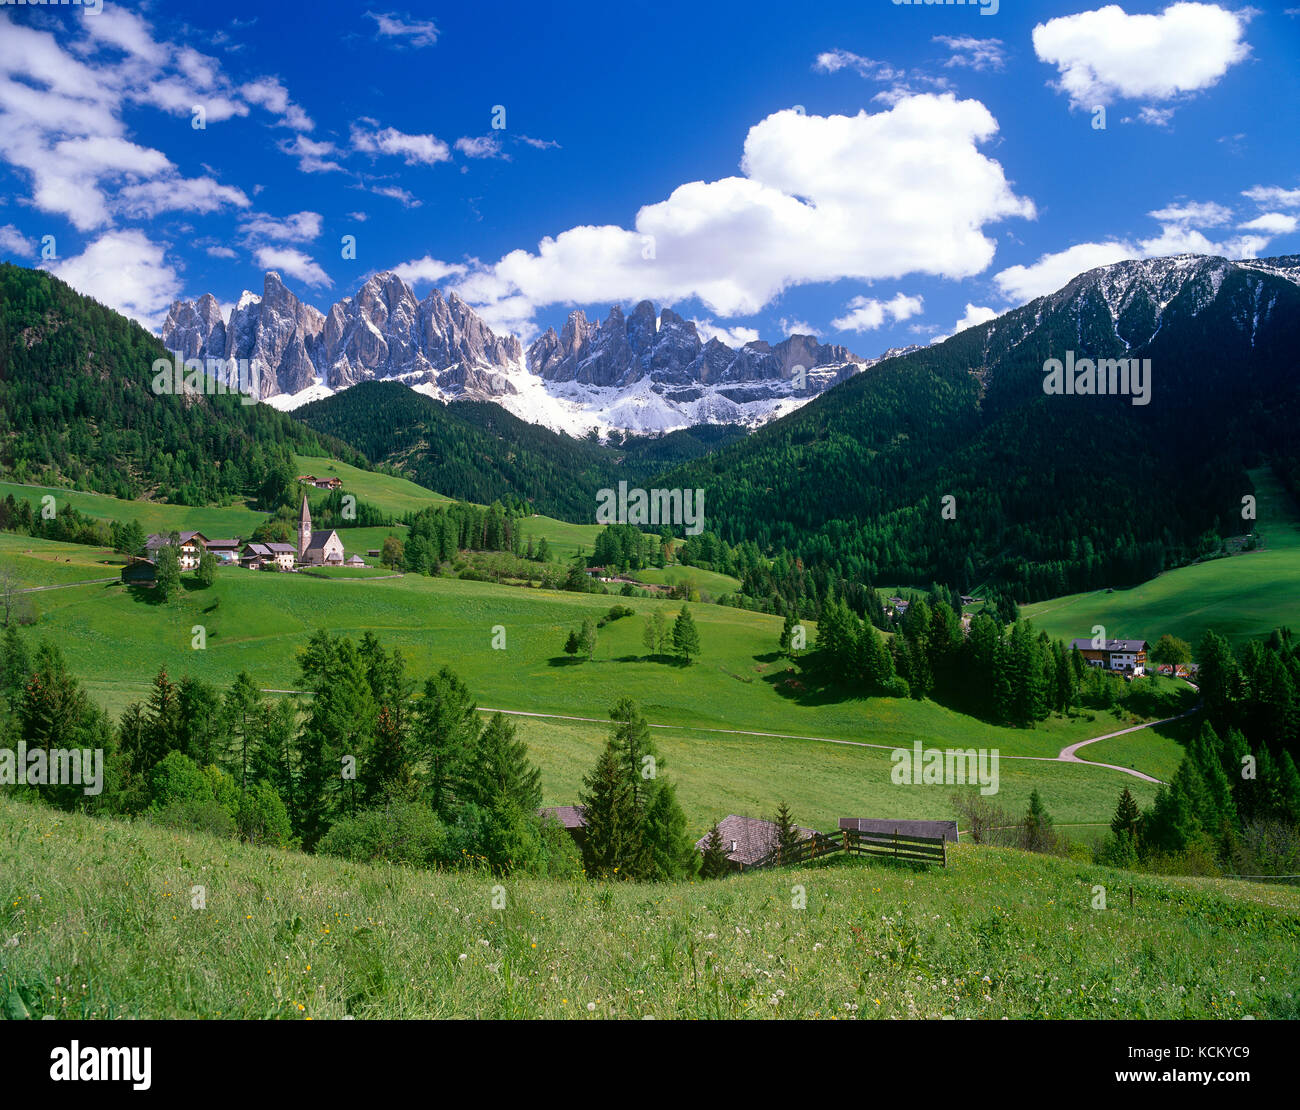 Magdalena St. et les Dolomites, Val di Funes, Trentino Alto Adige, Italie. Banque D'Images